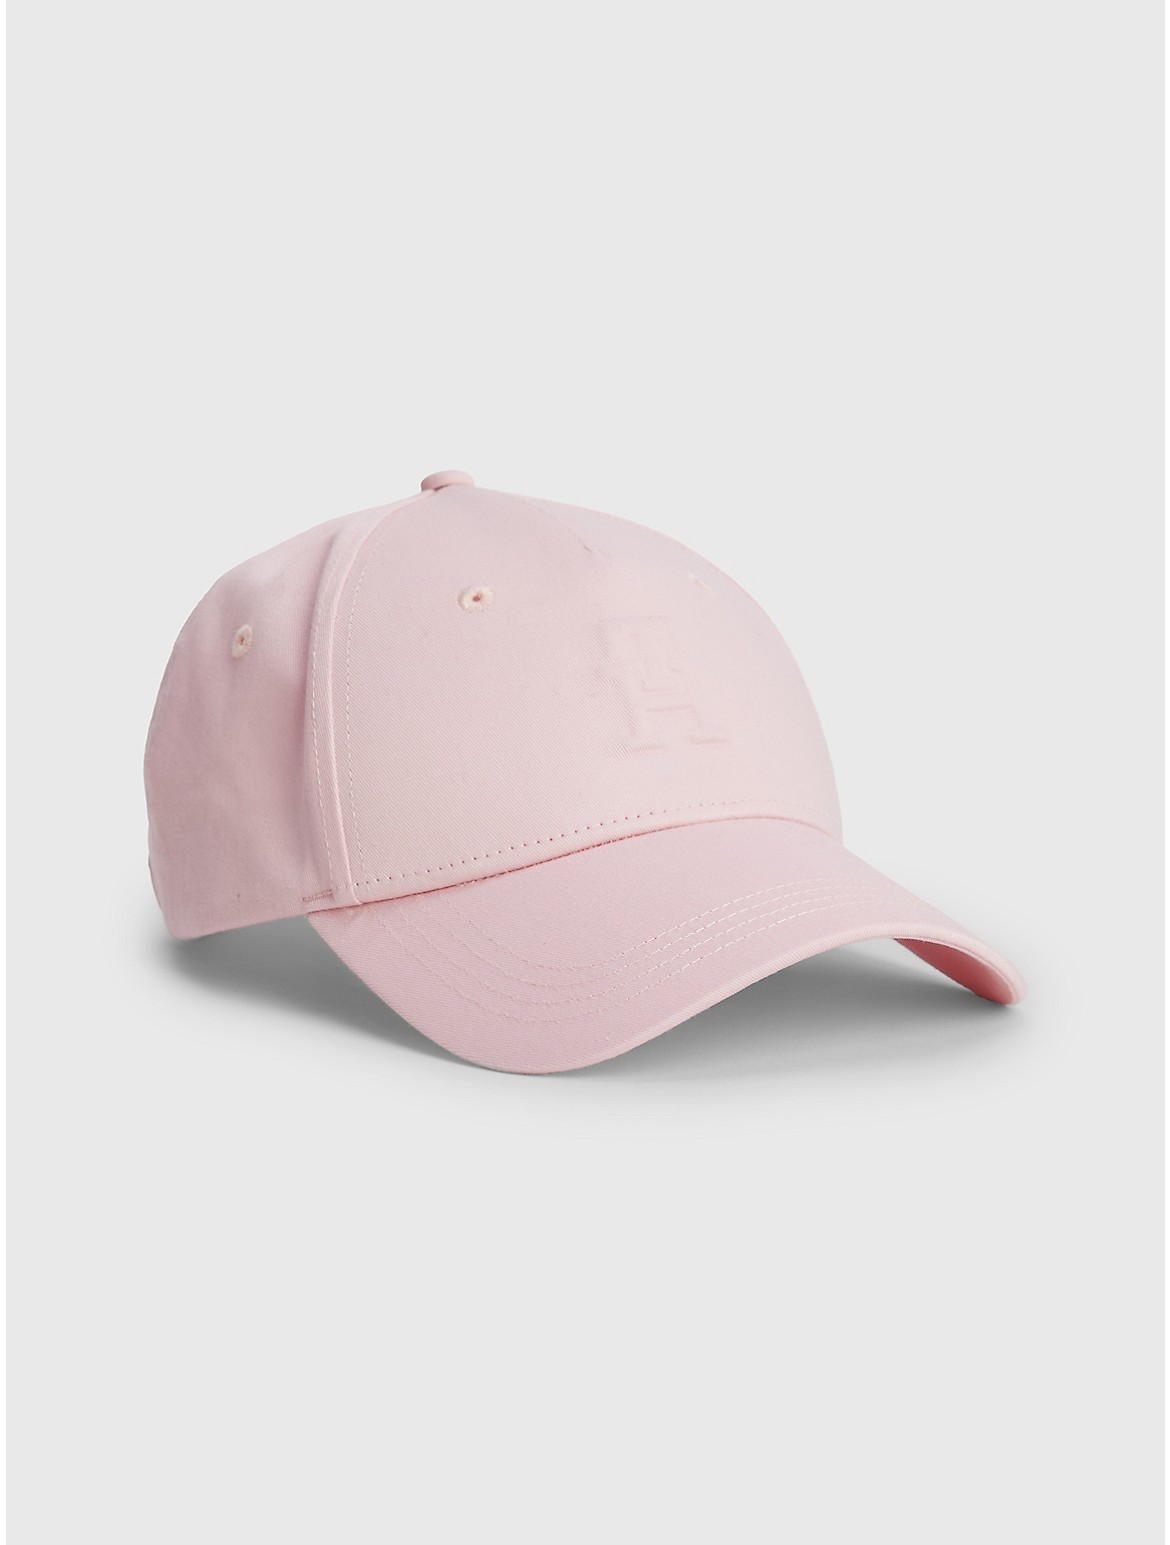 Tommy Hilfiger Women's Logo Baseball Cap - Pink